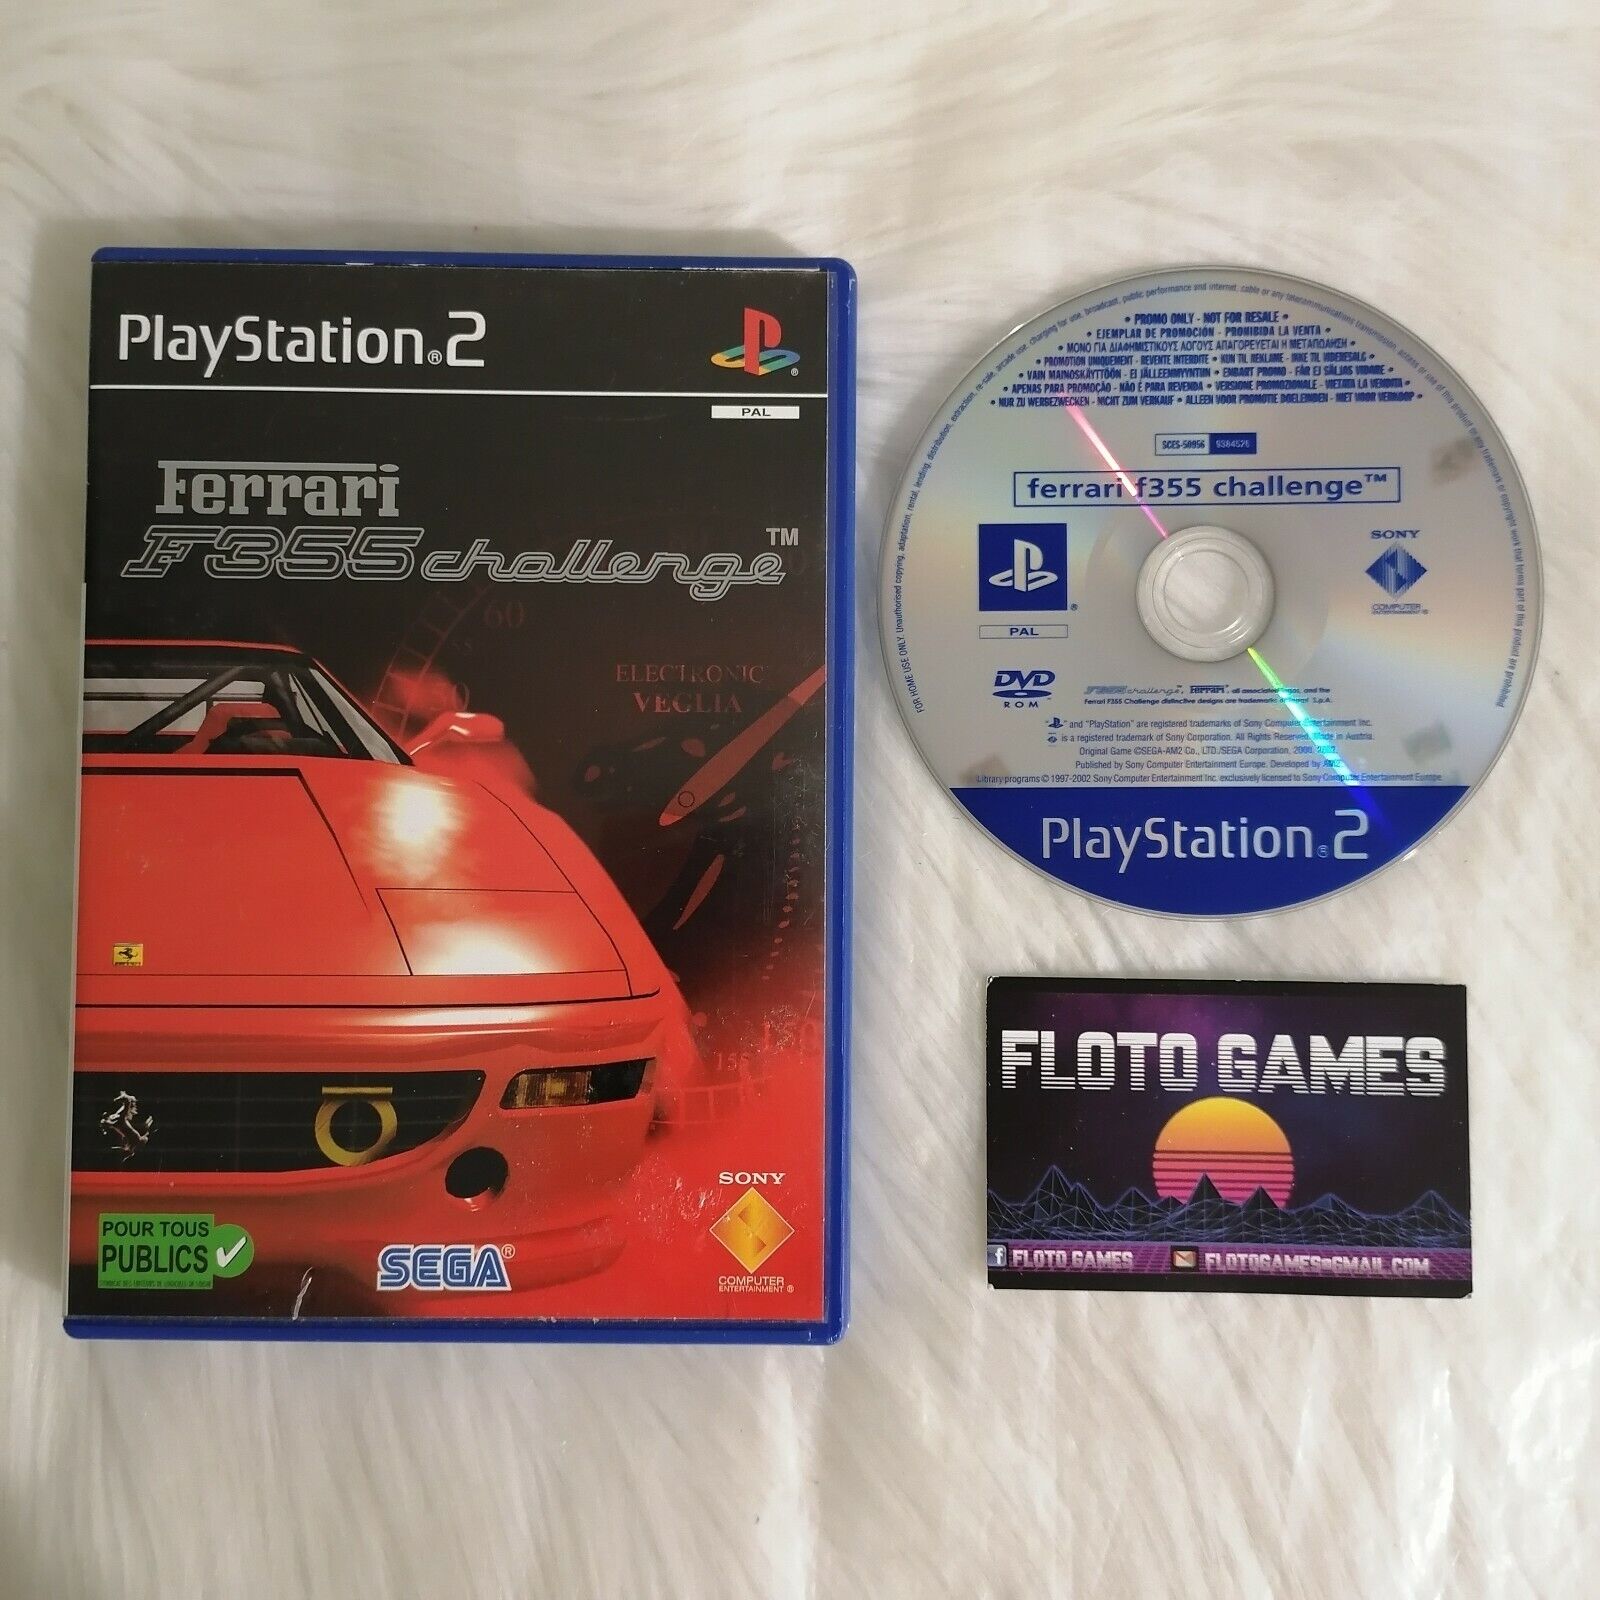 Jeu Ferrari F355 Challenge Playstation 2 PS2 PAL PROMO Version - Floto Games